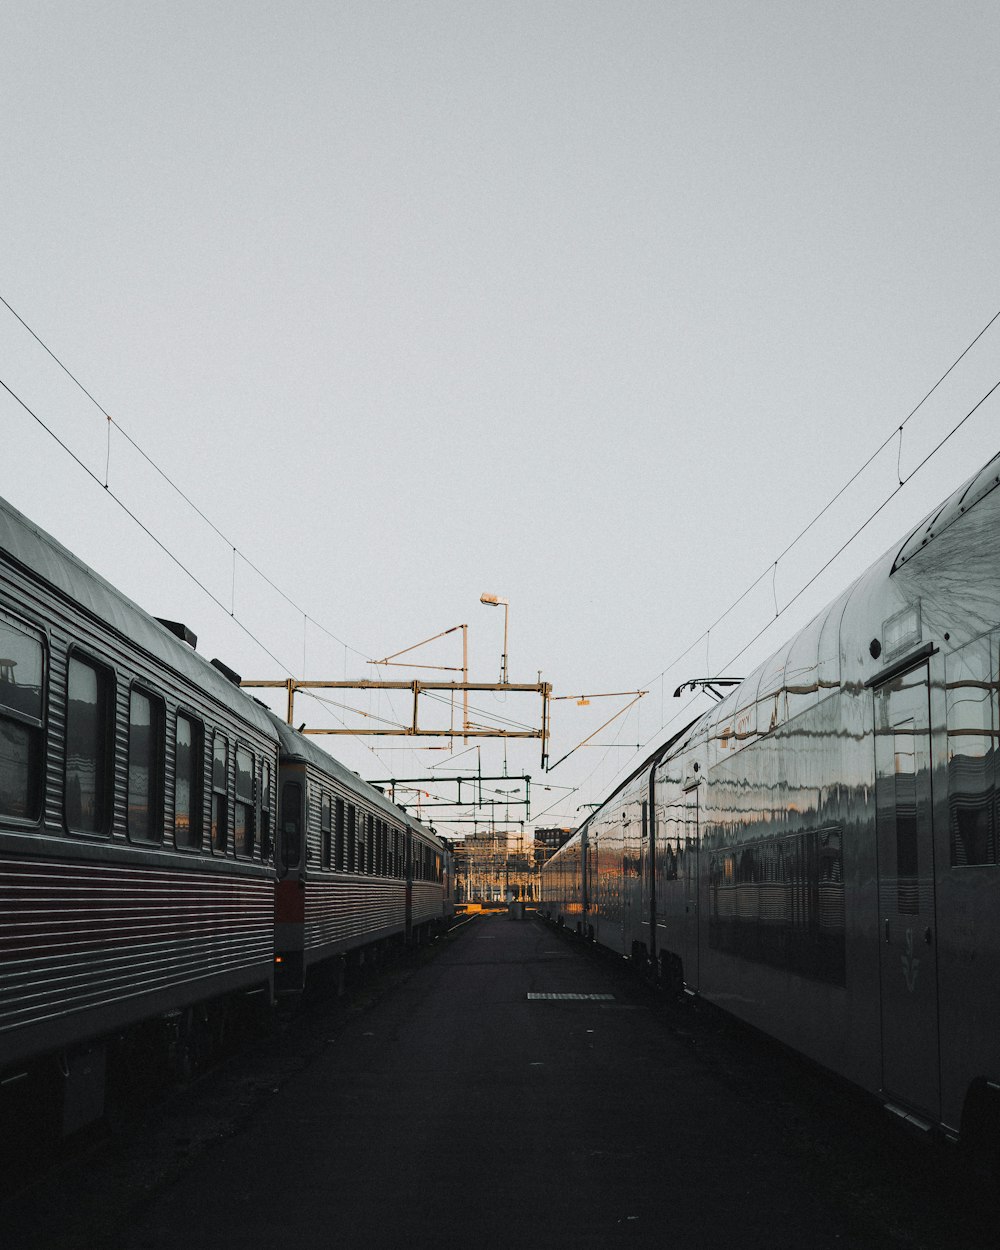 two gray passenger trains